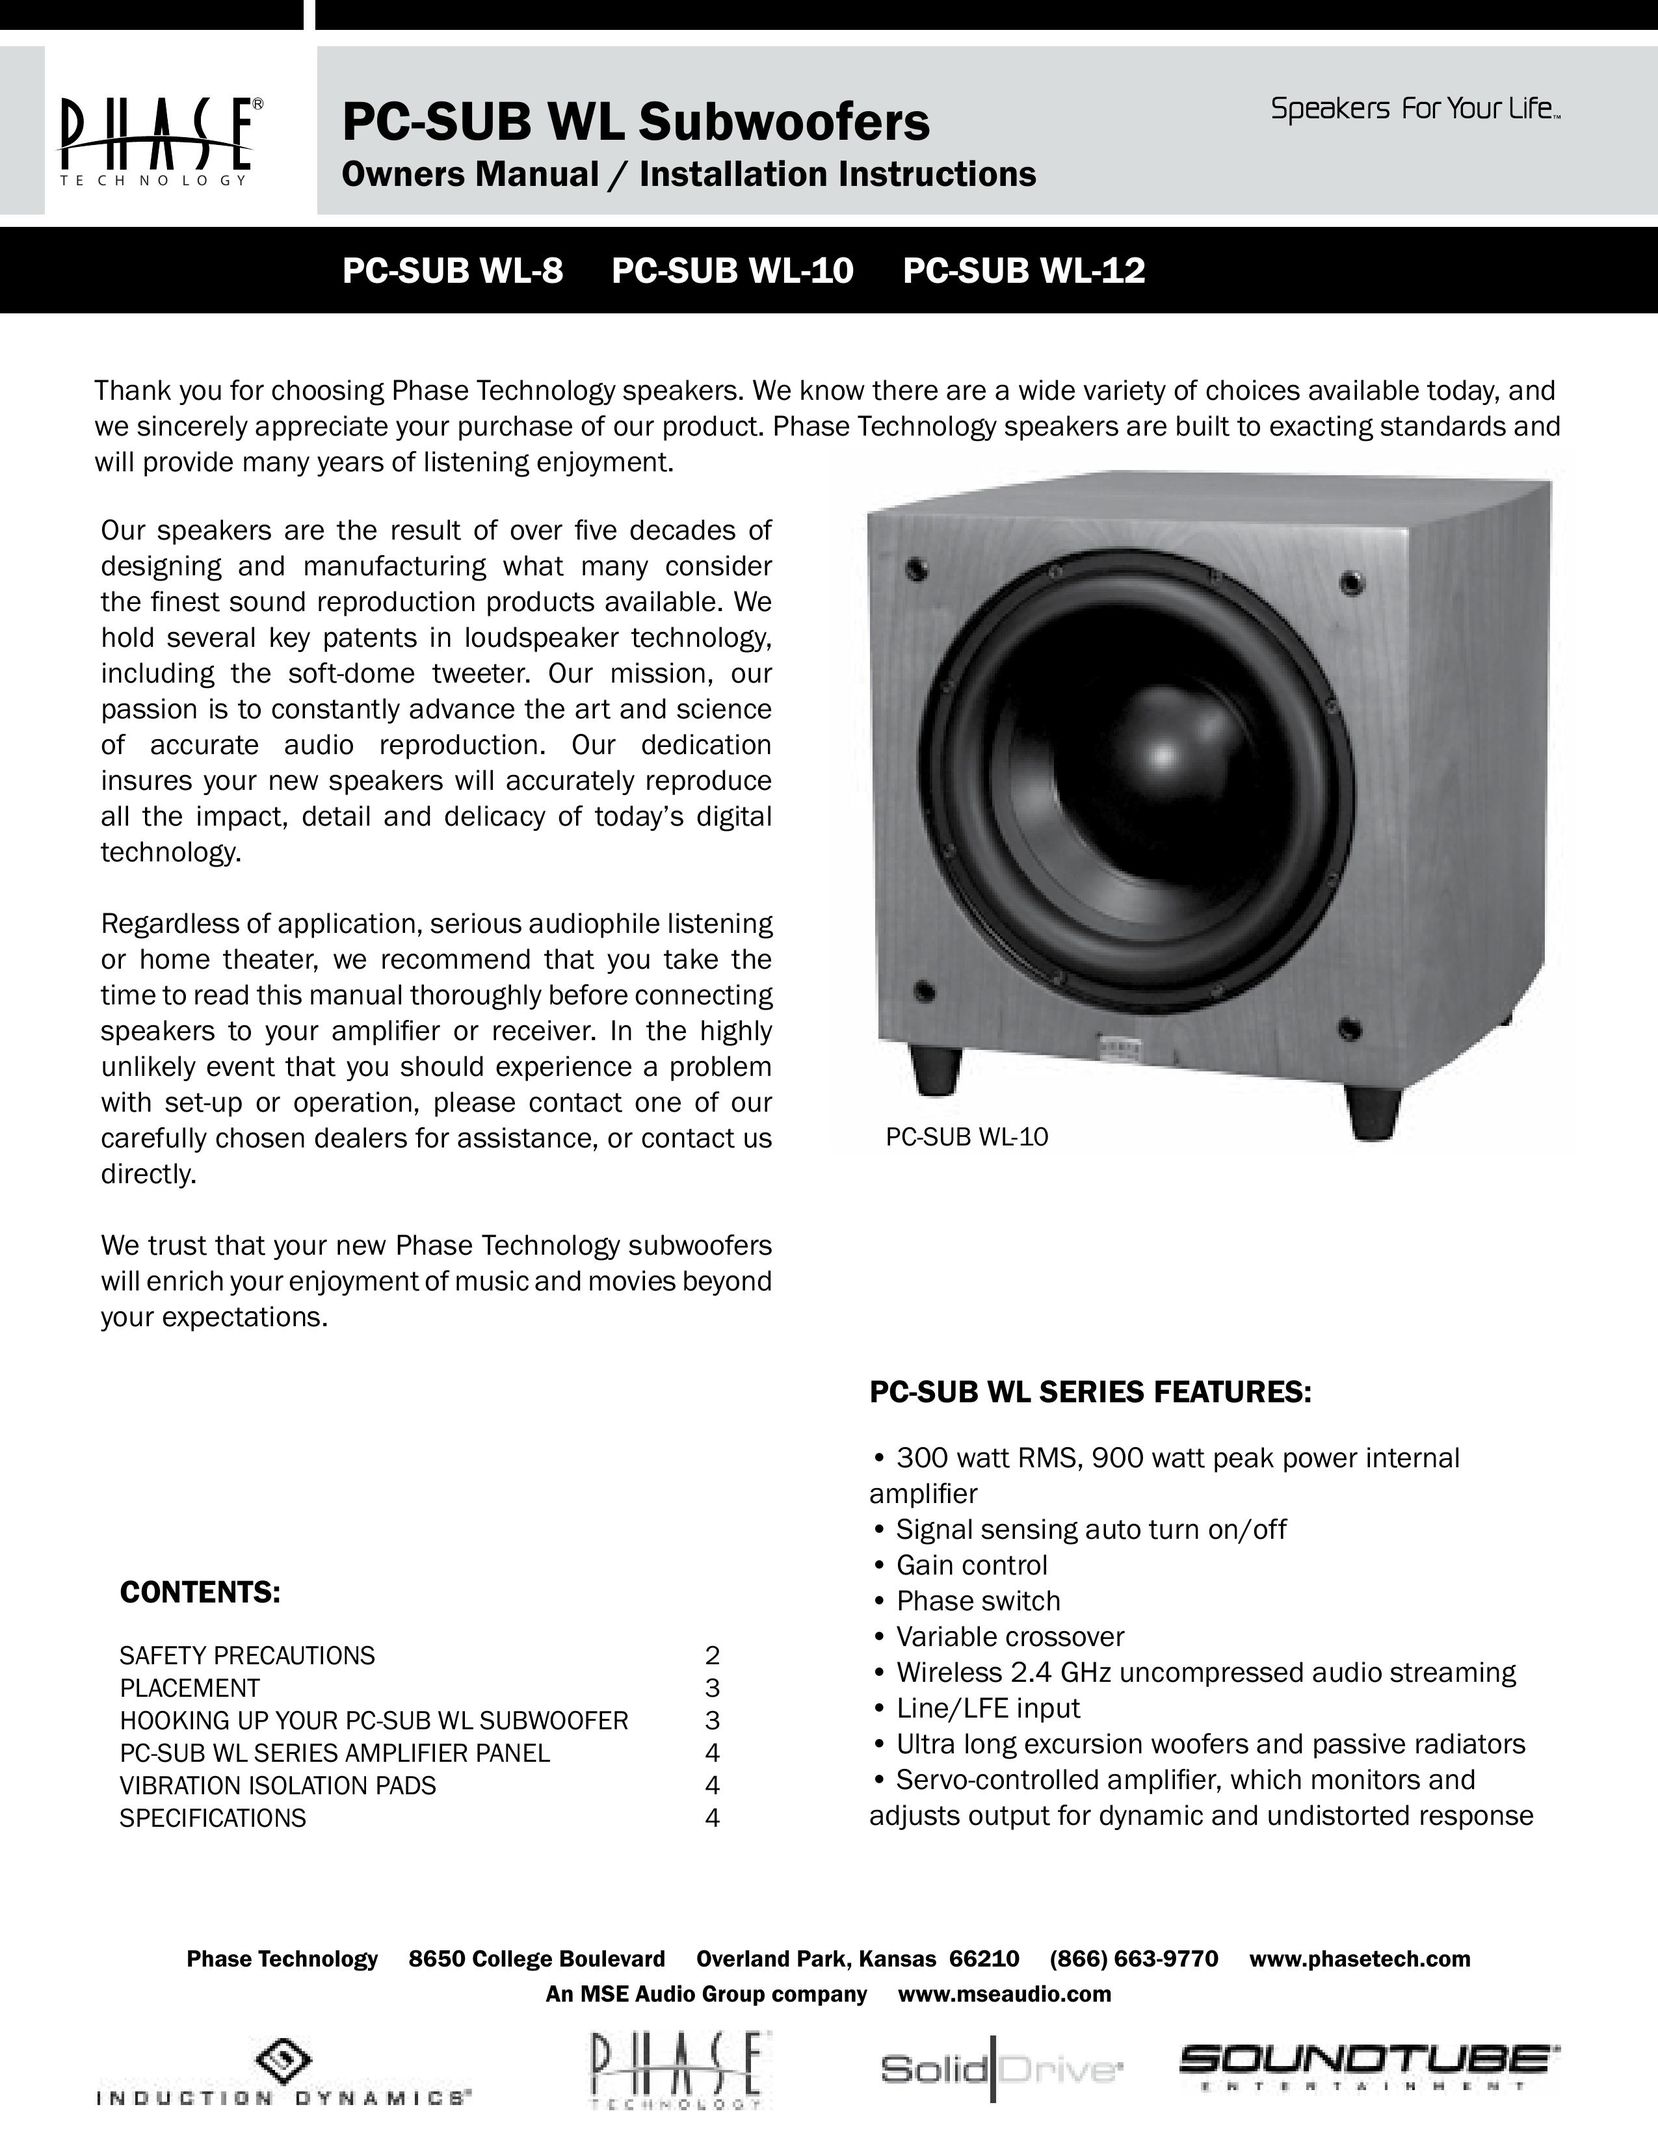 Phase Technology PC-SUB WL-12 Speaker User Manual